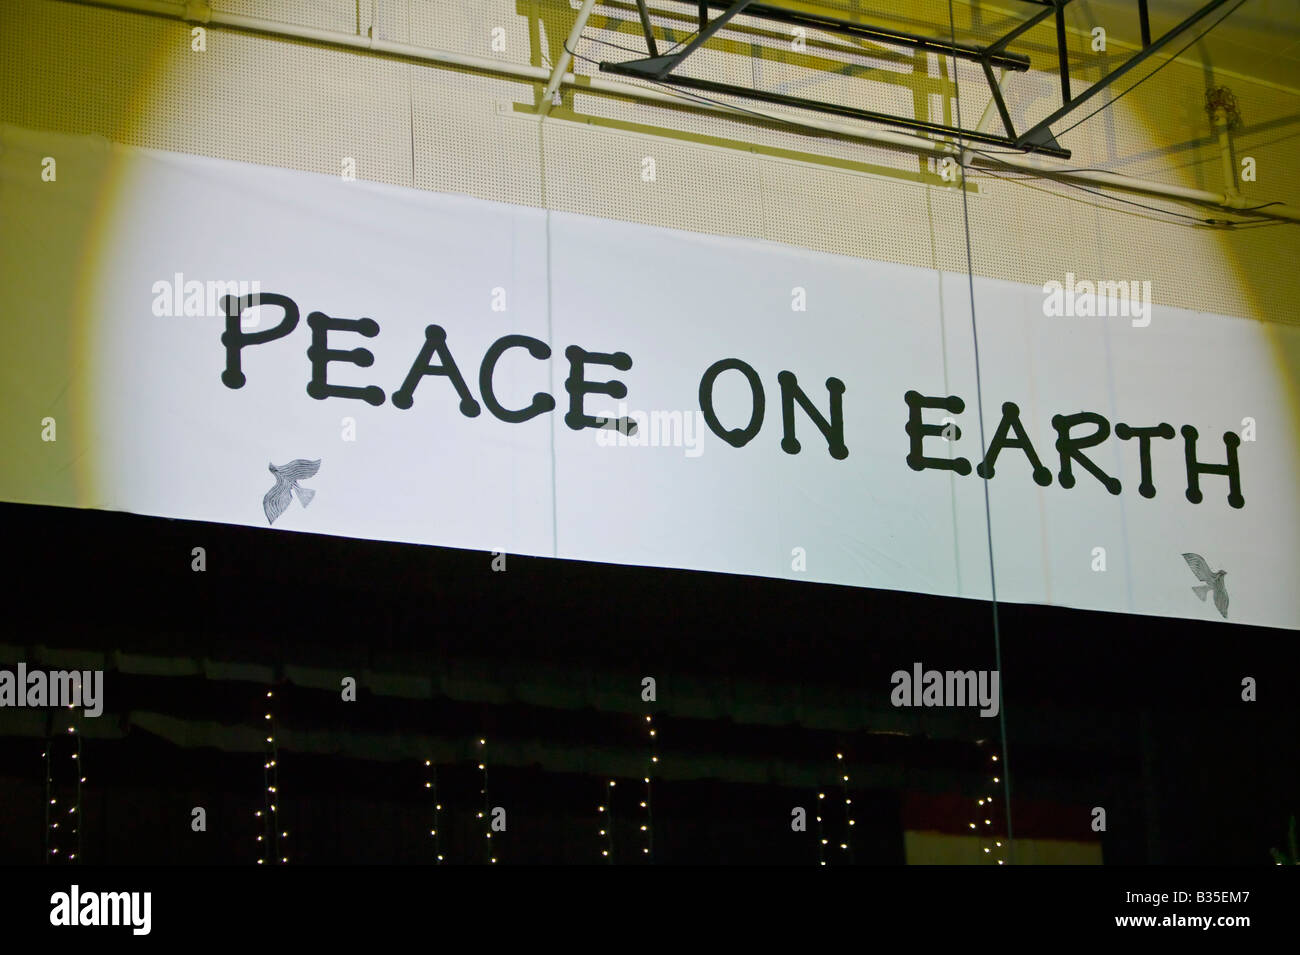 Peace on Earth sign Stock Photo - Alamy